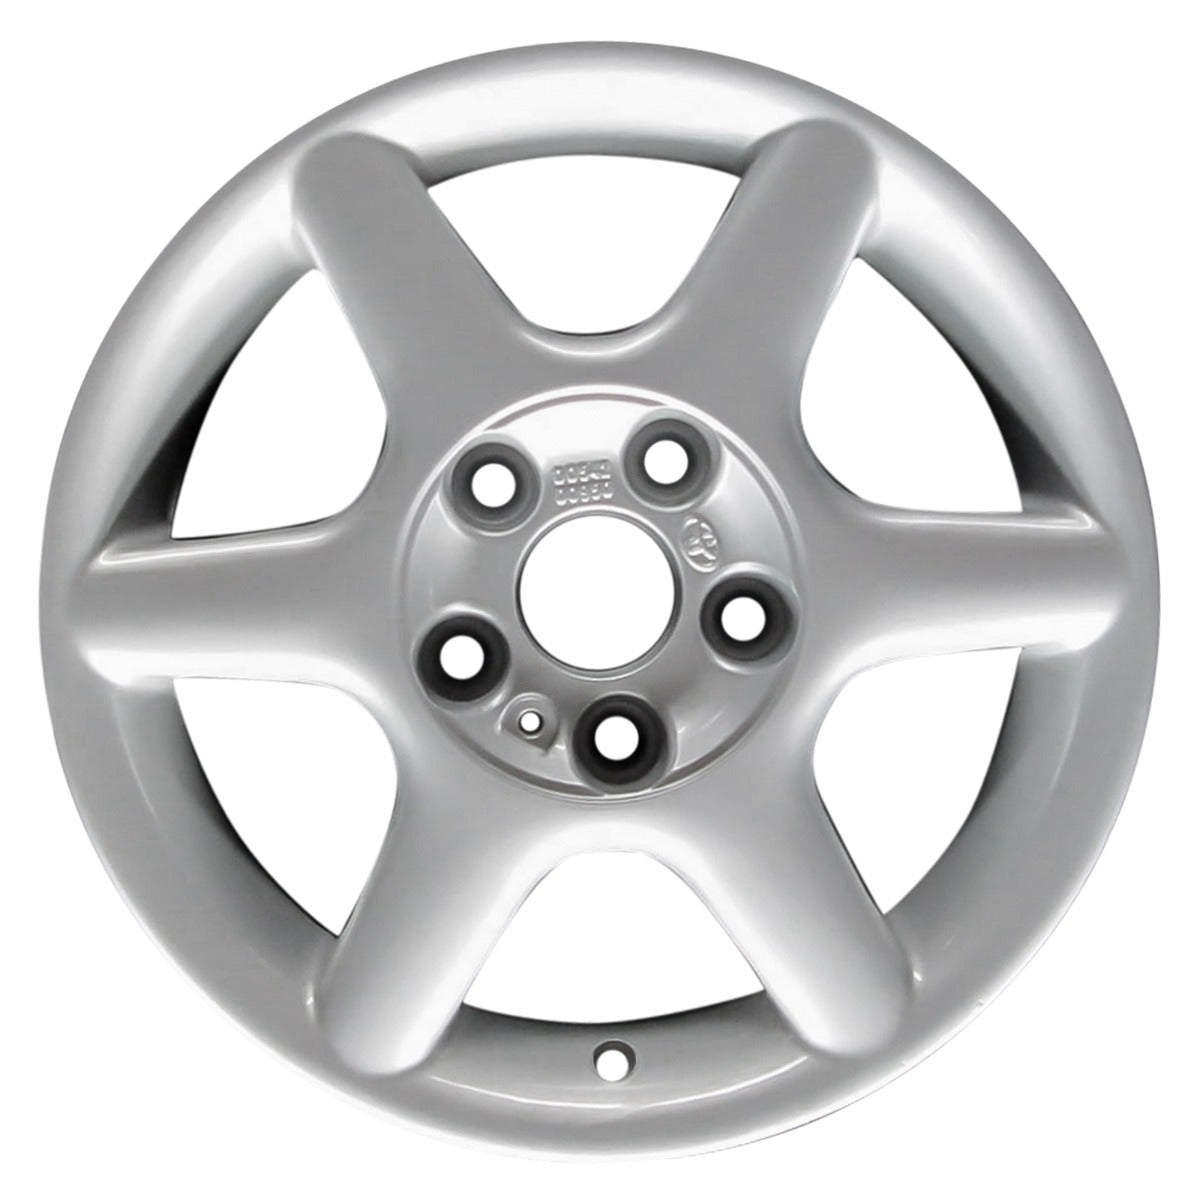 1997 Toyota Avalon 15" OEM Wheel Rim W69334S